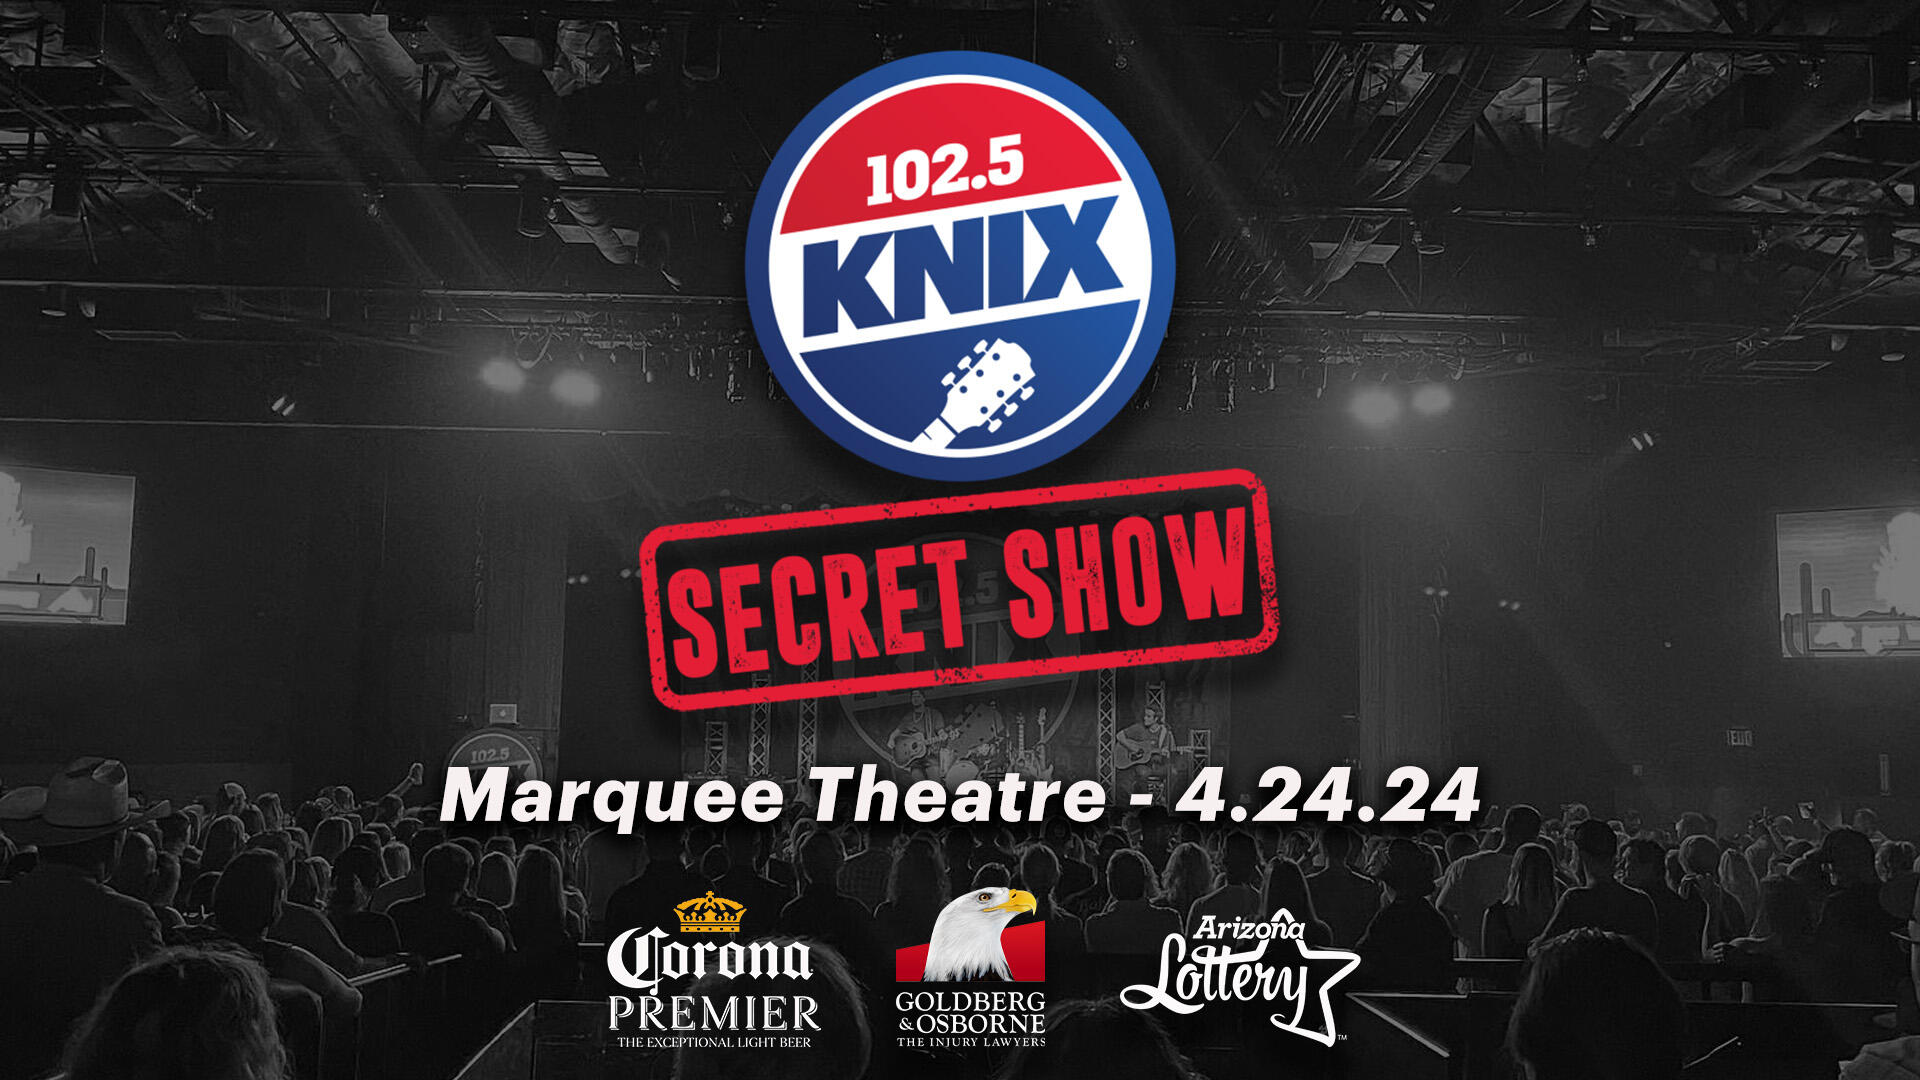 KNIX Secret Show - 102.5 KNIX